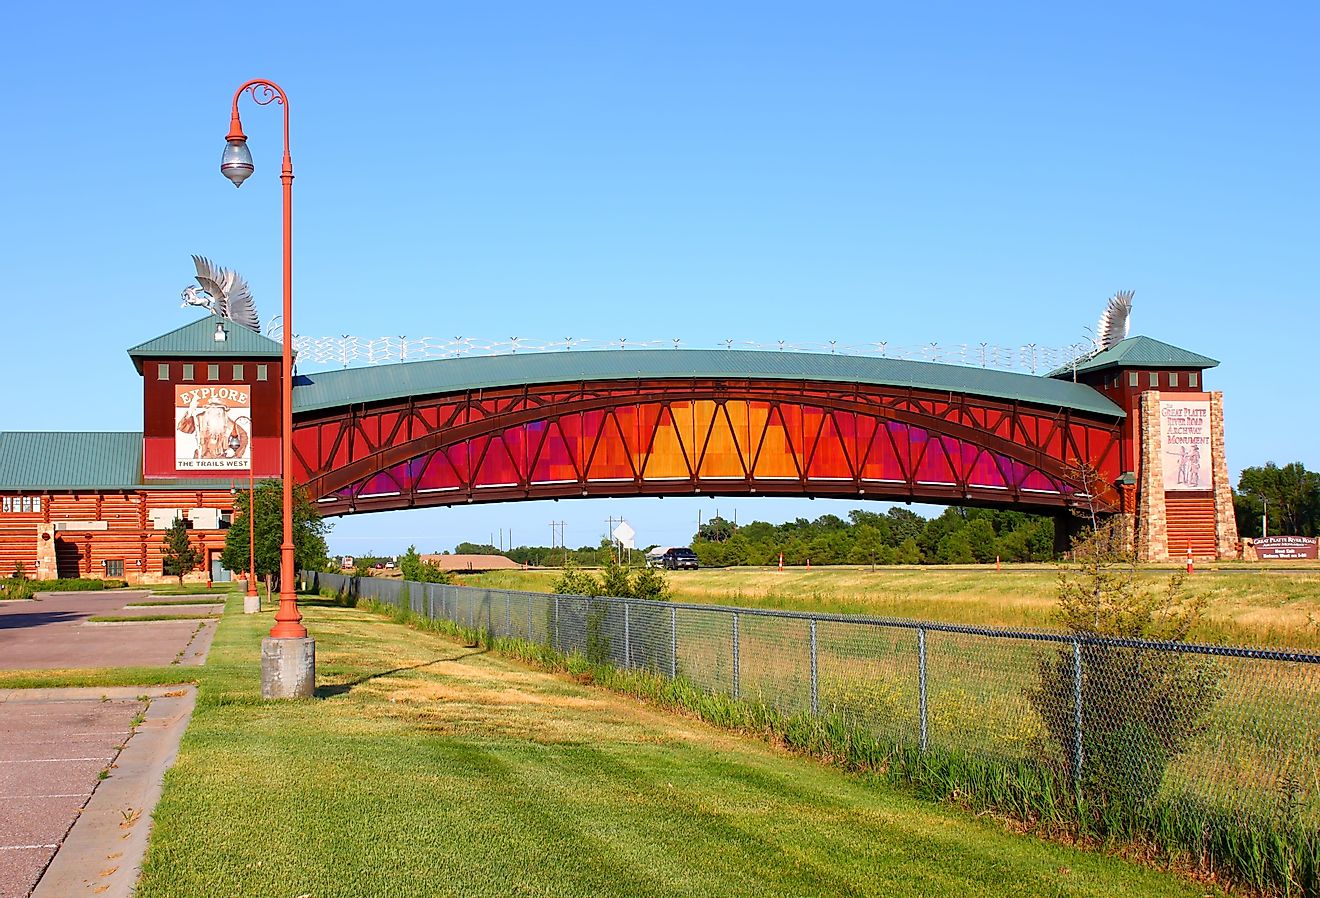  The Great Platte River Road Archway in Kearsey, Nebraska. Image credit Jason Patrick Ross via Shutterstock.